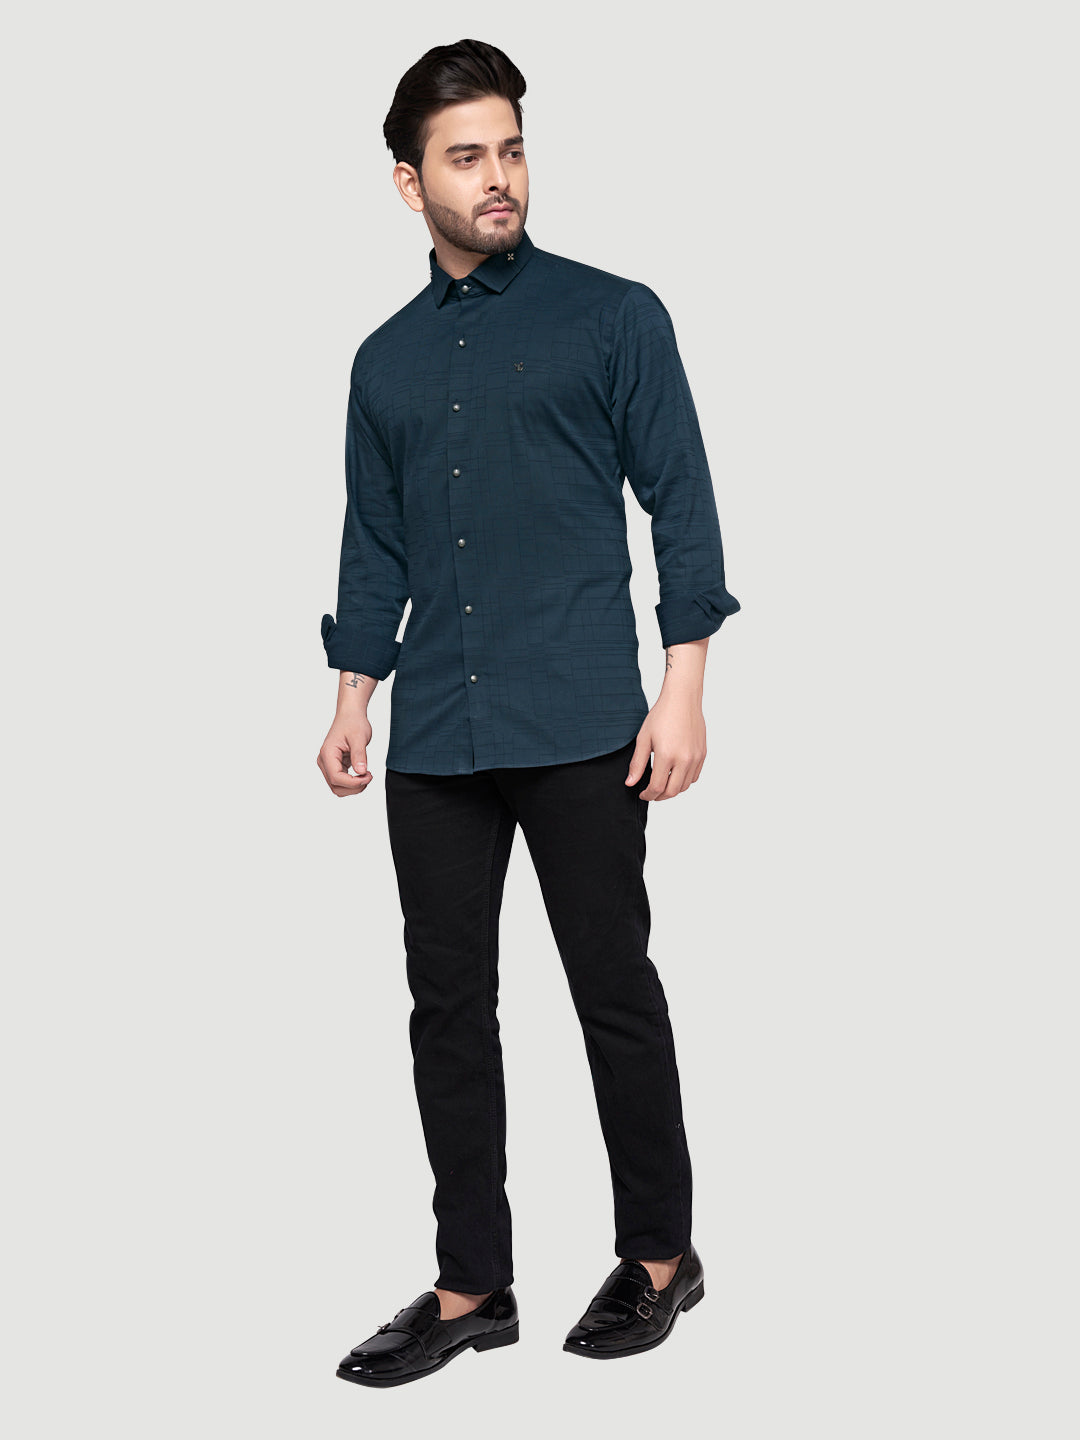 Men's Designer Shirt with Collar Accessory & Broach